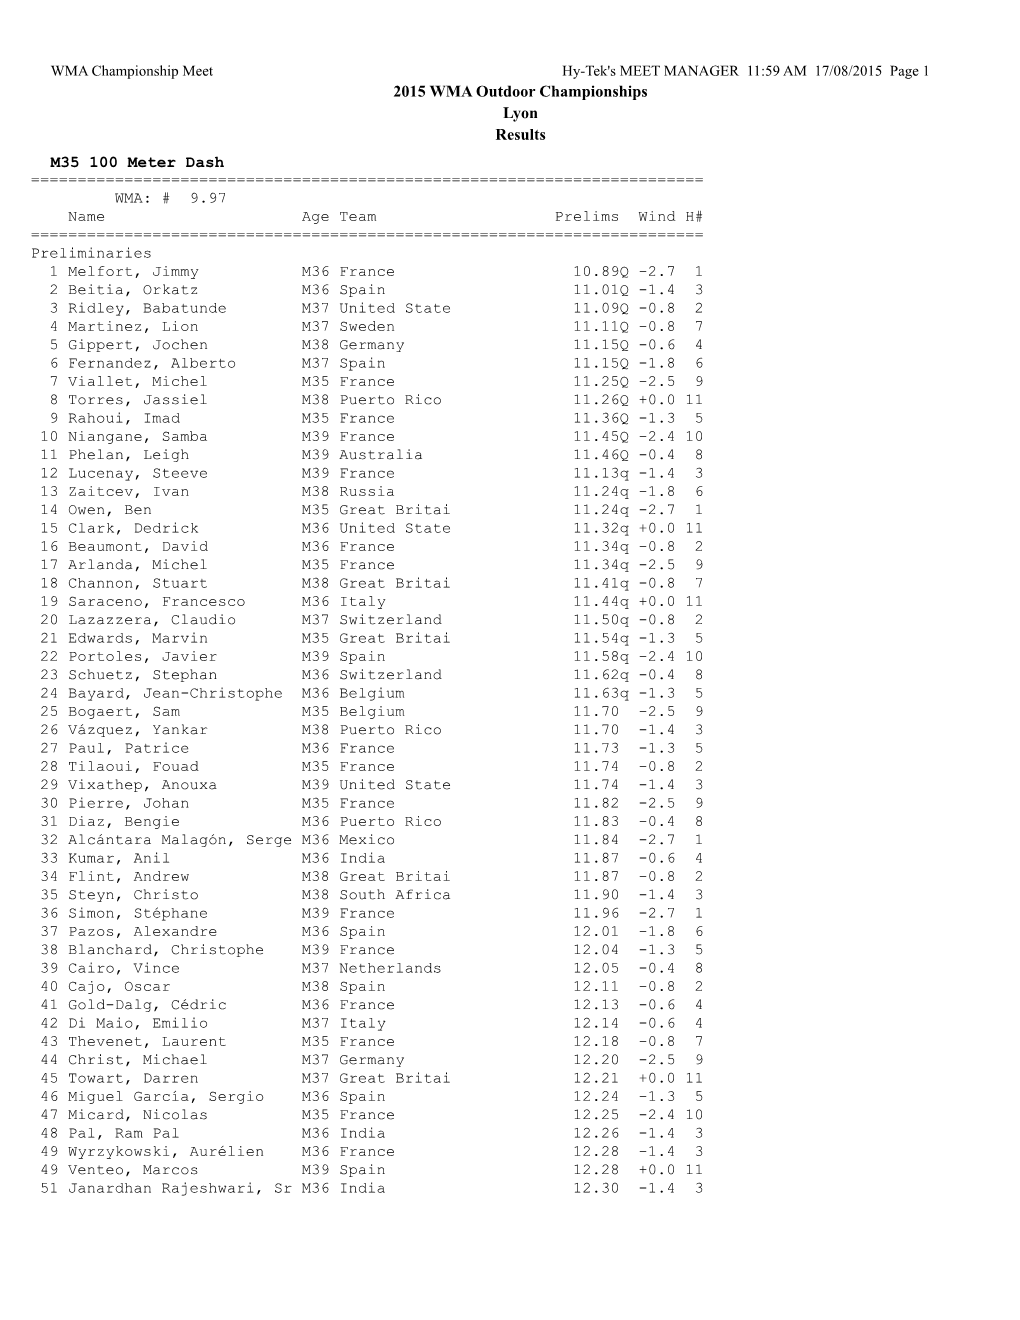 2015 WMA Outdoor Championships Lyon Results M35 100 Meter Dash ===